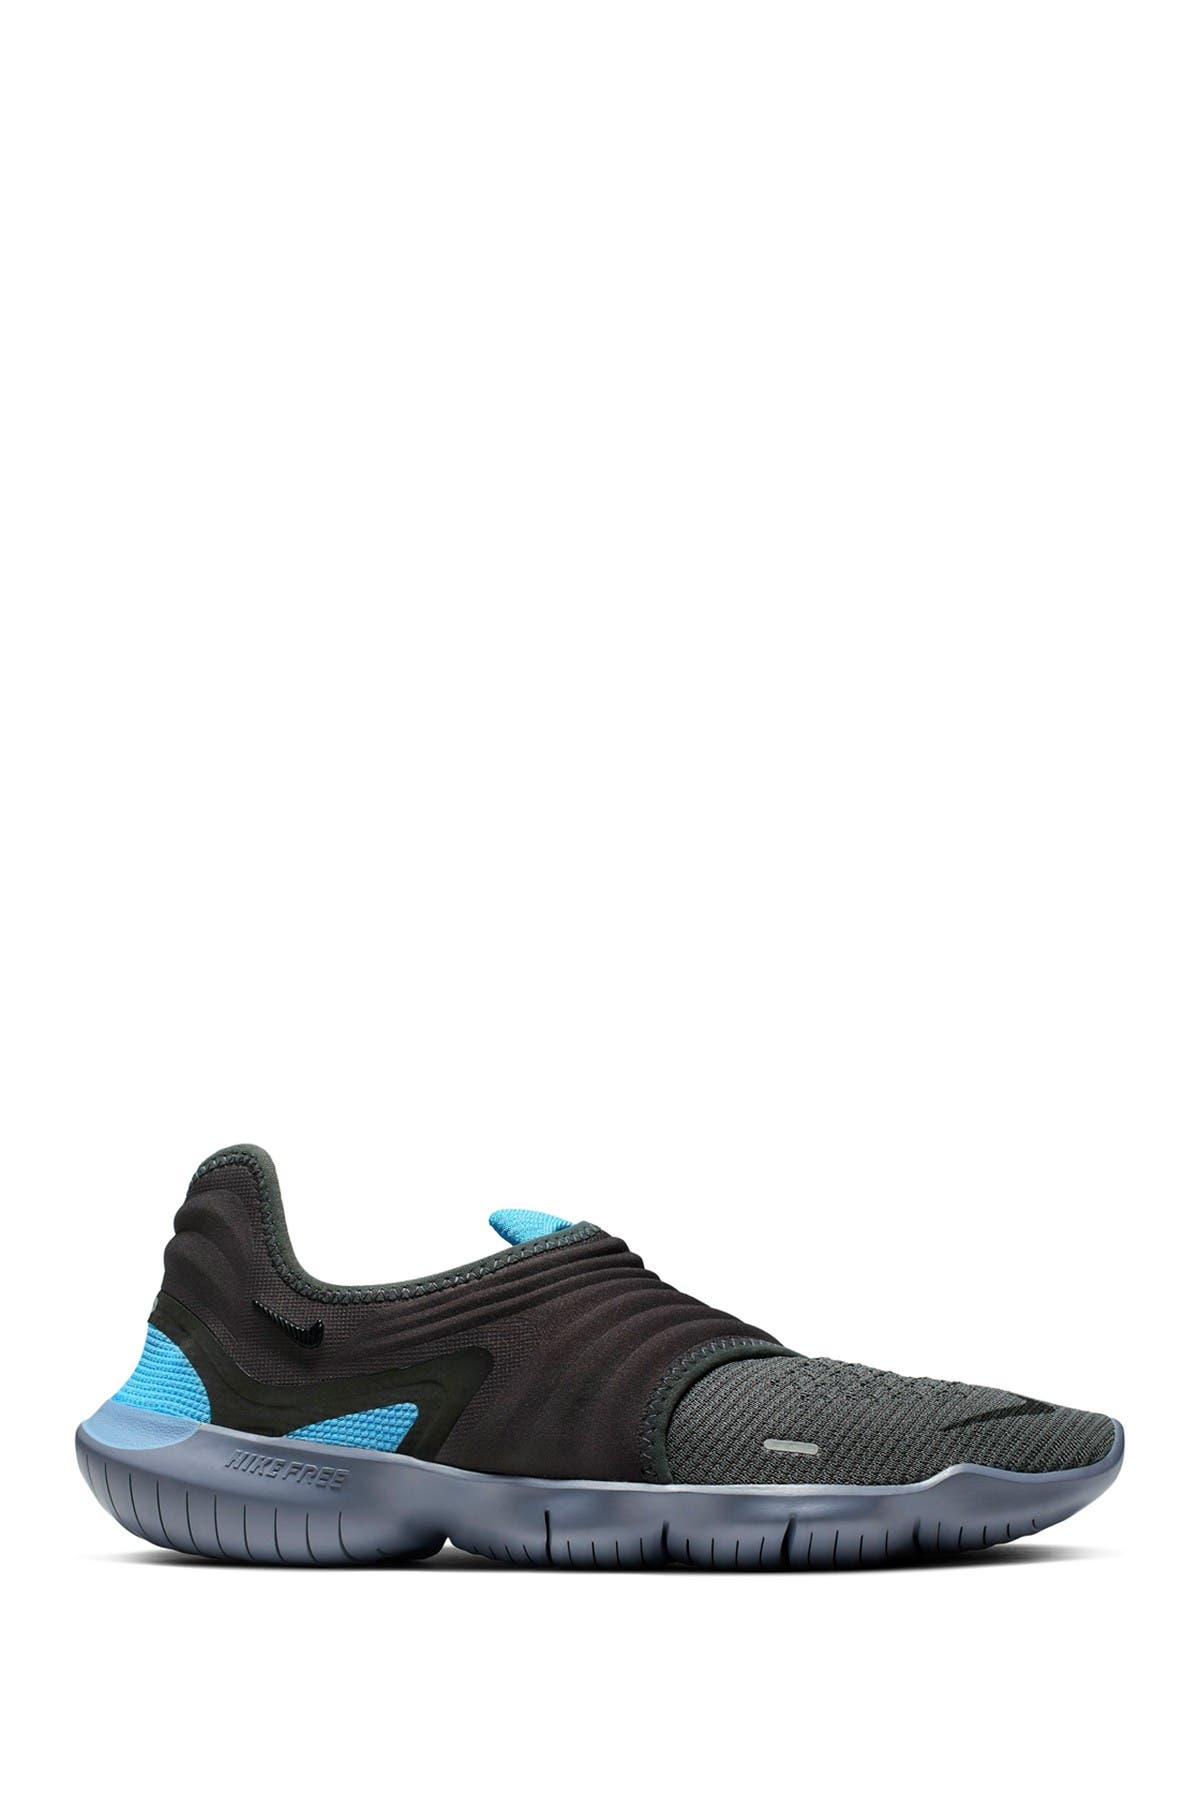 Nike | Free RN Flyknit 3.0 Running Shoe 